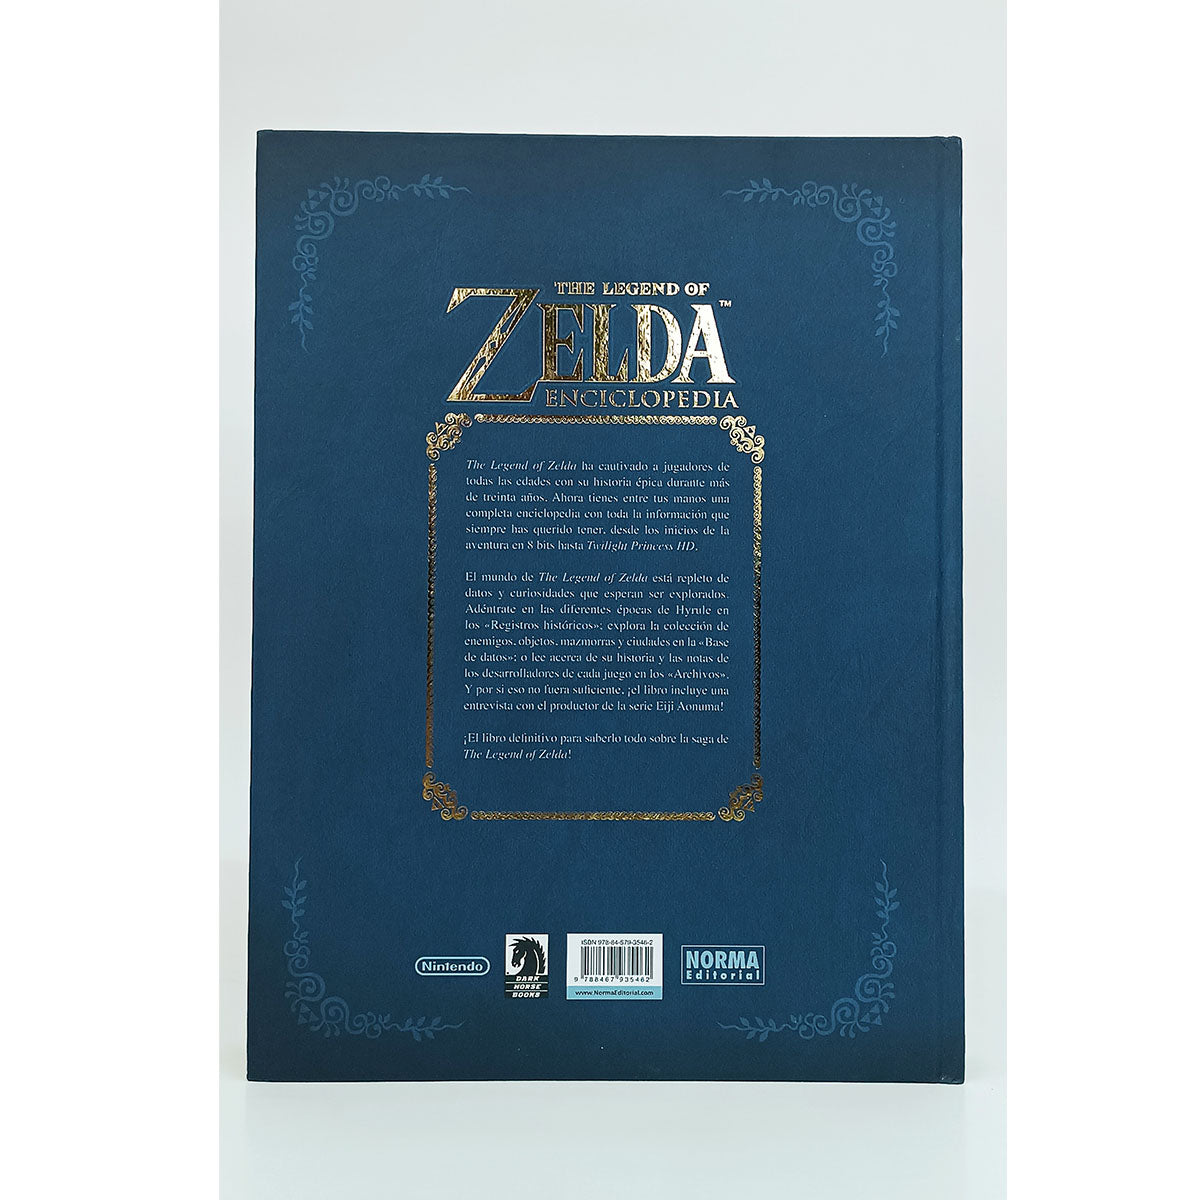 The Legend of Zelda: Enciclopedia